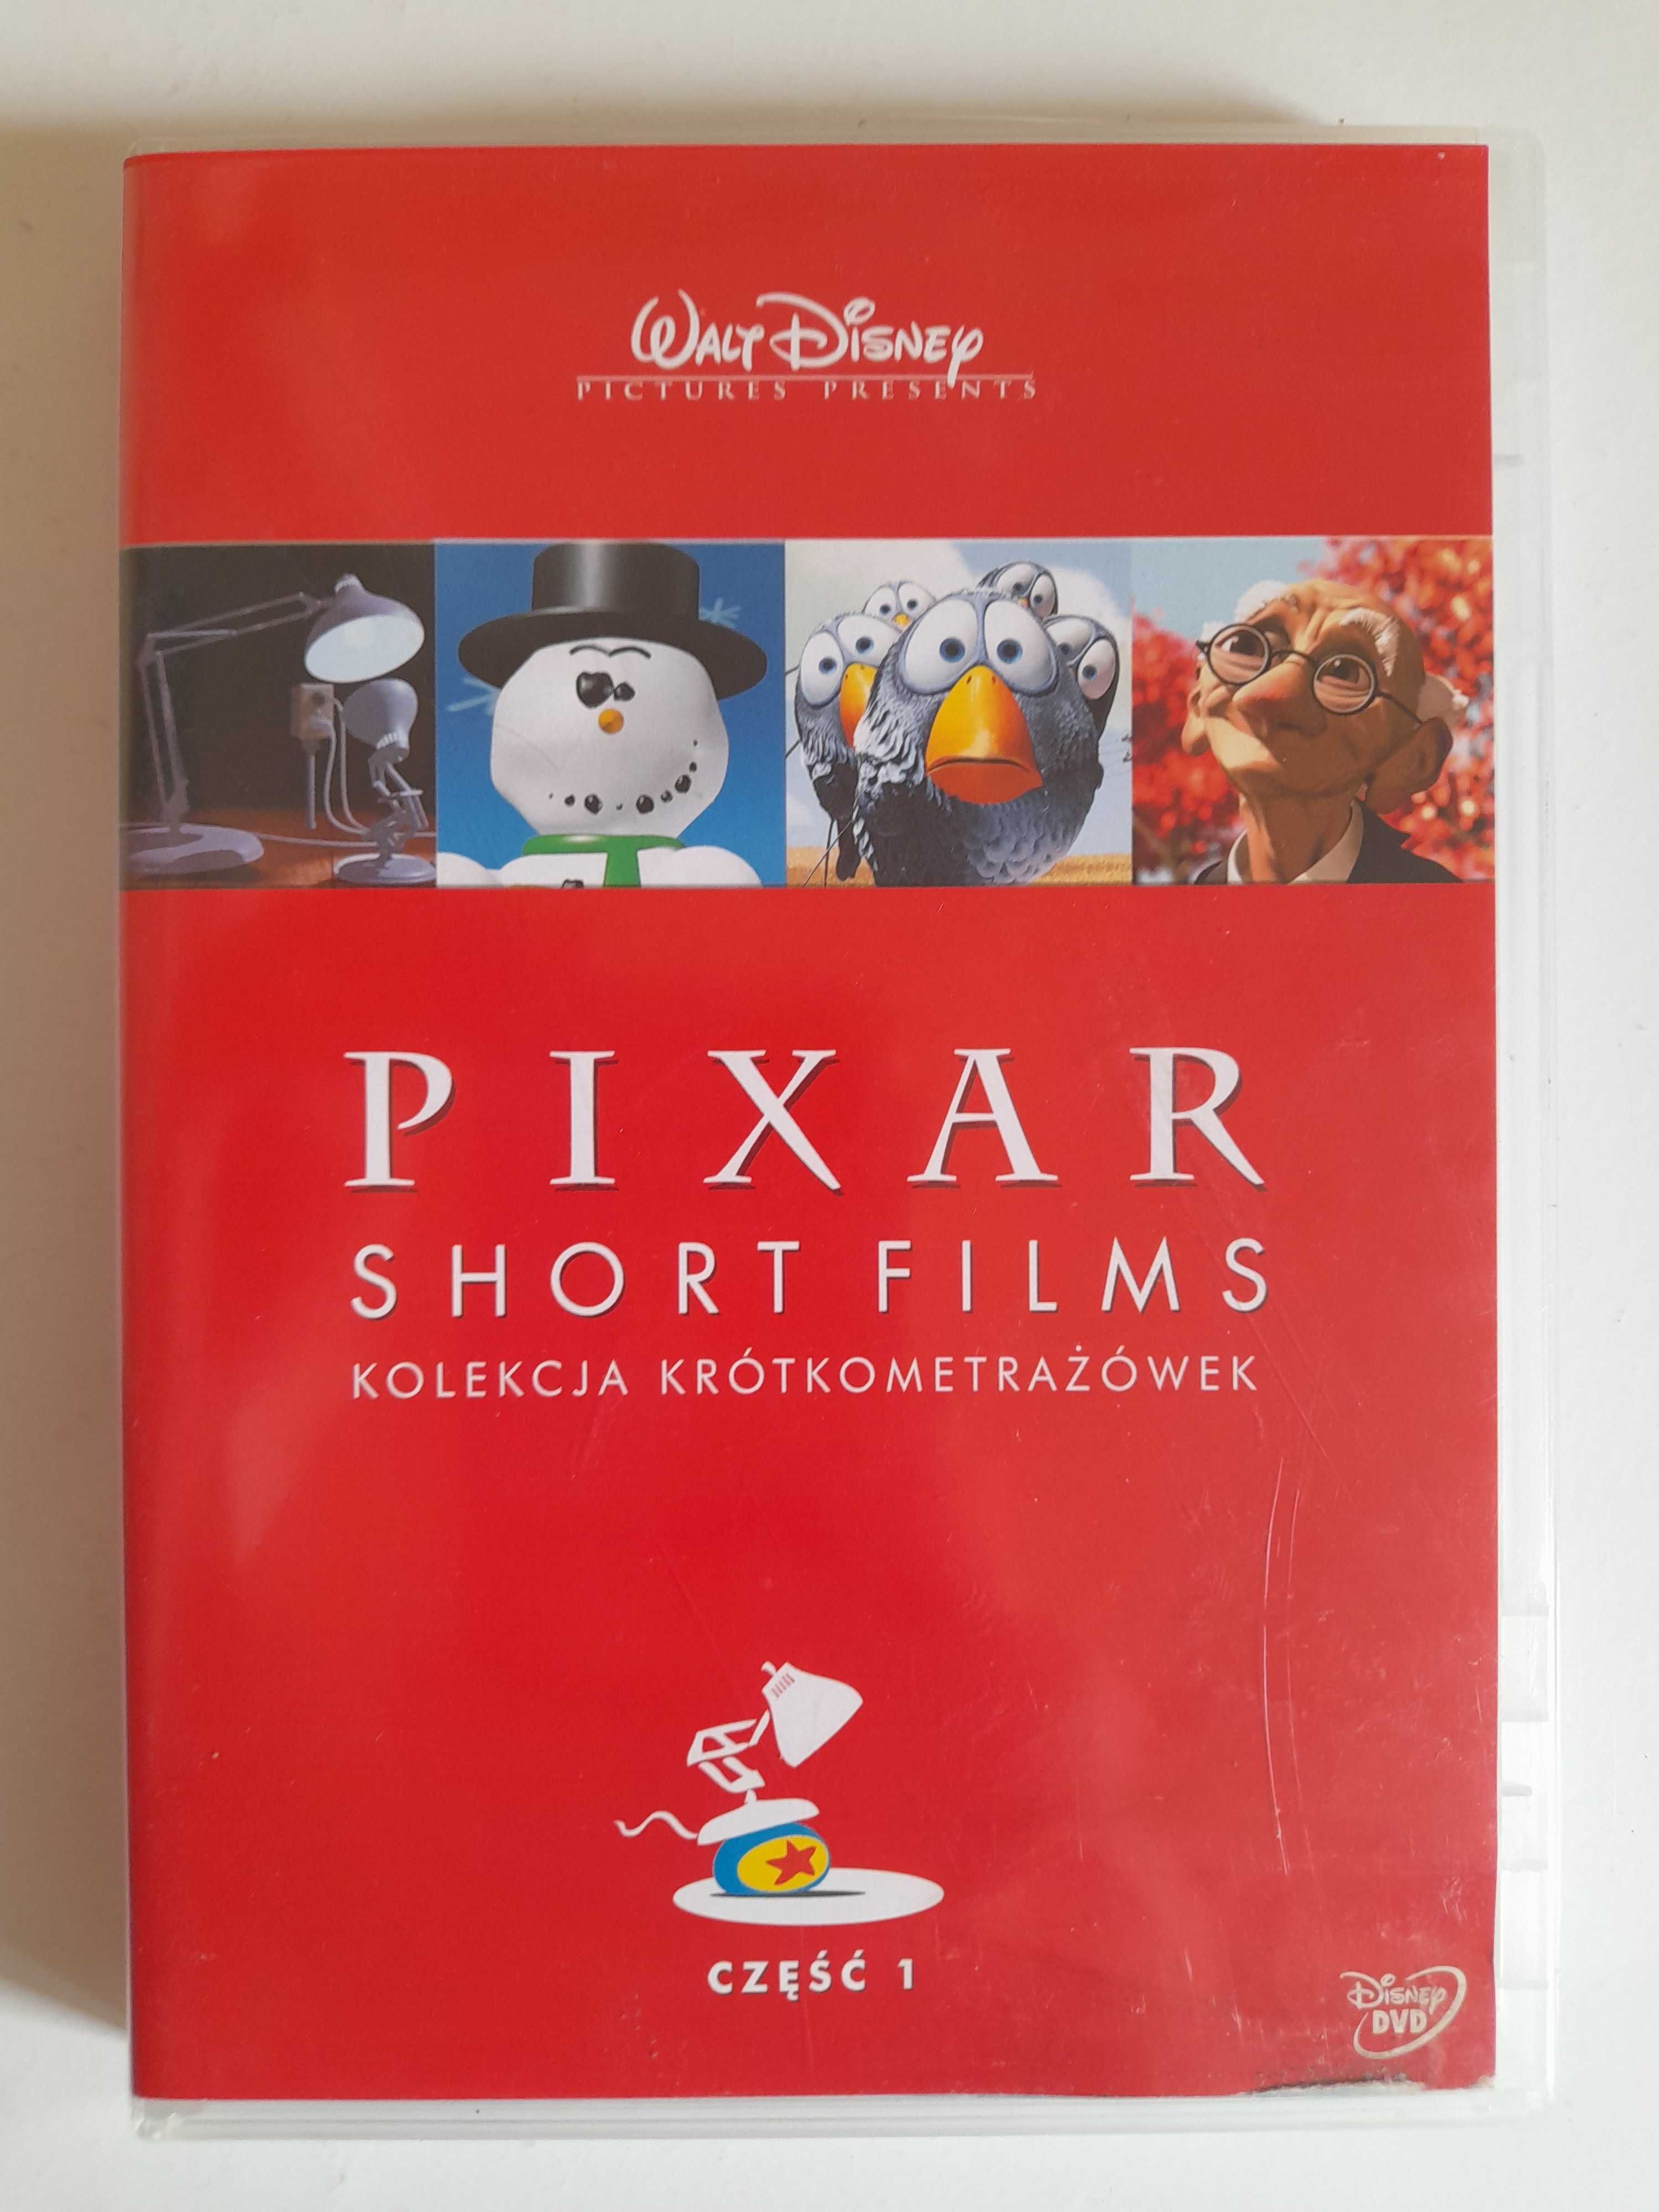 Pixar Short Films Kolekcja krótkometrażówek 1 płyta DVD